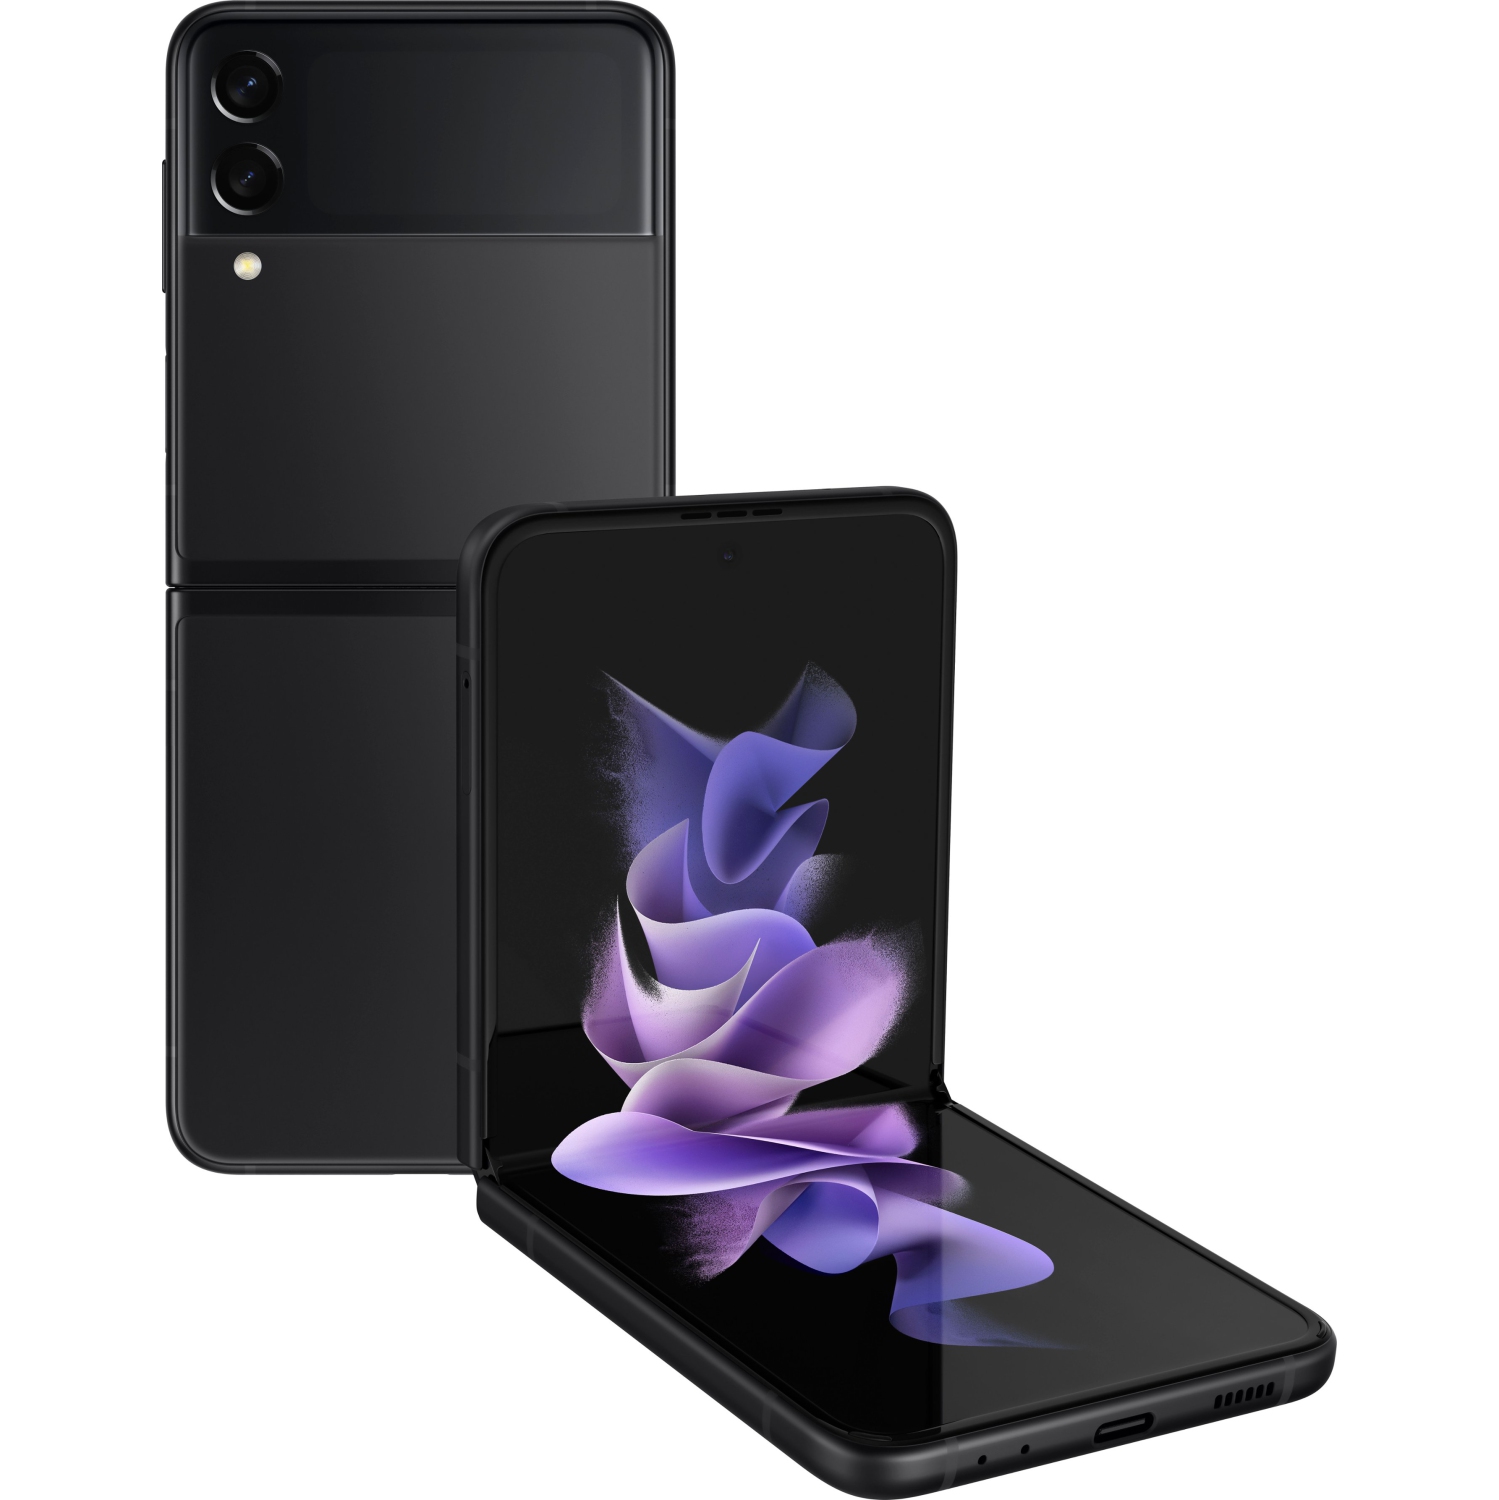 Samsung Galaxy Z Flip3 5G 128GB Smartphone - Phantom Black - Unlocked - Open Box